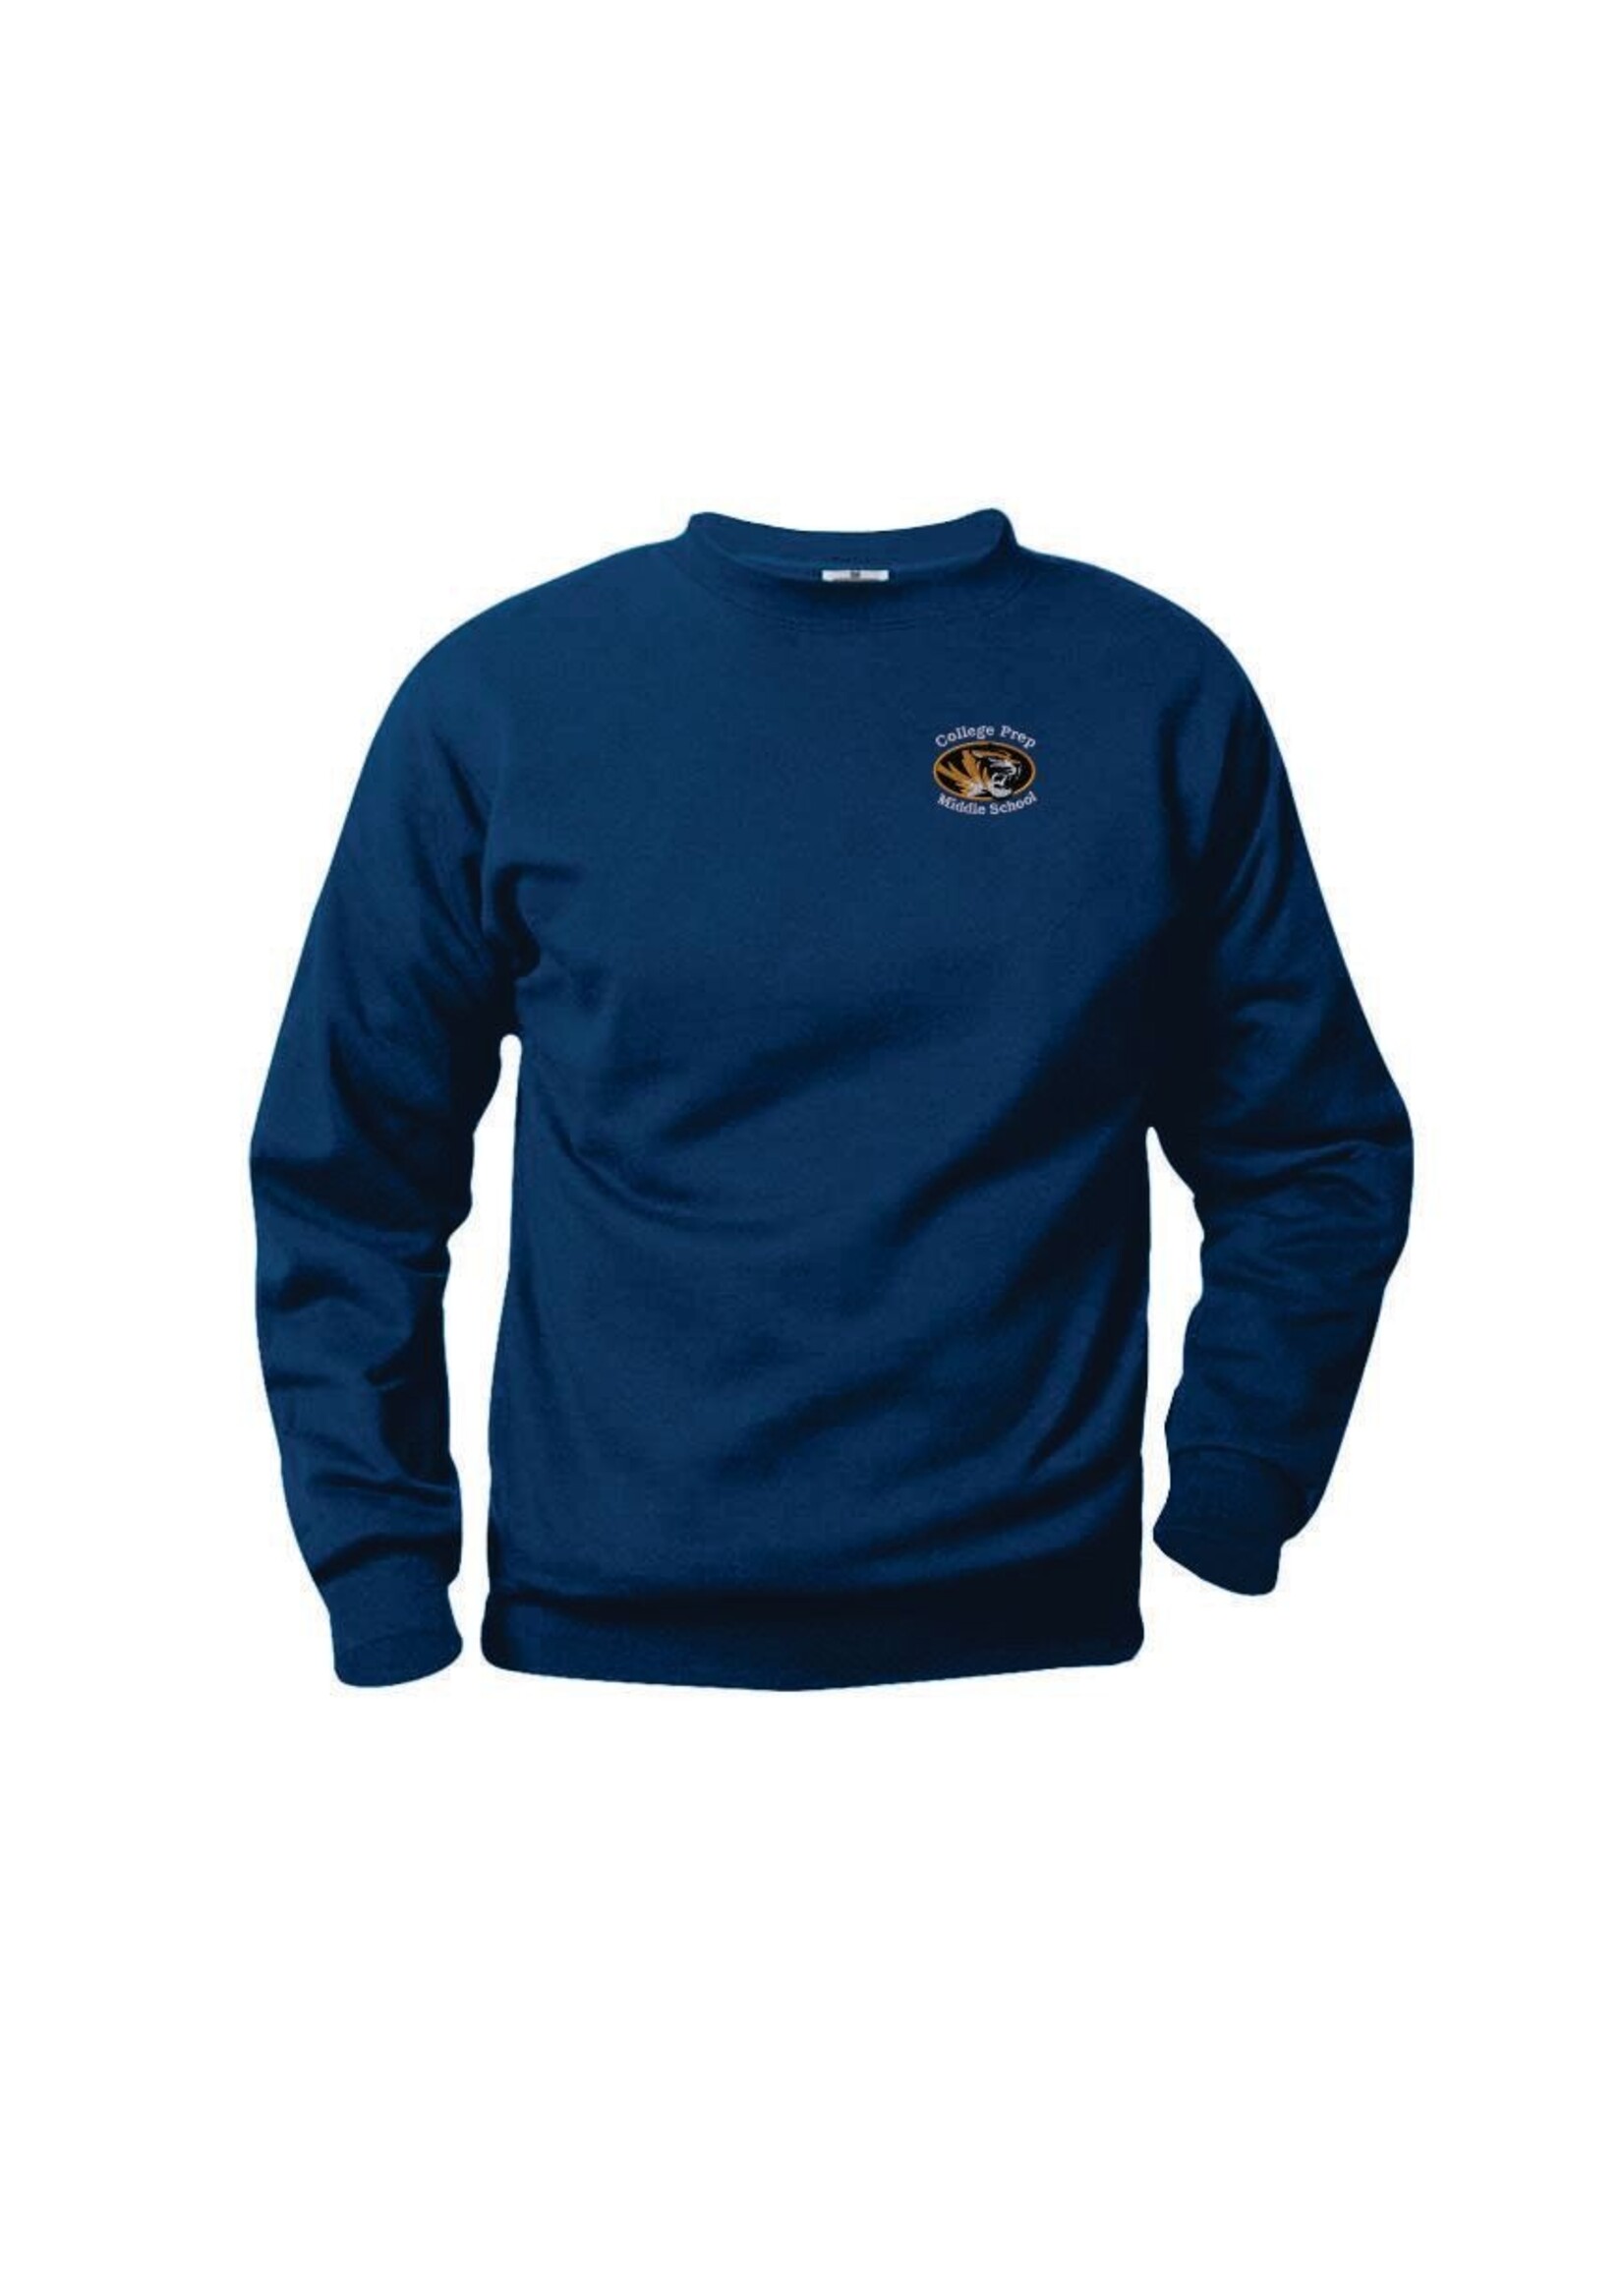 CPMS Navy Fleece Crewneck Sweatshirt